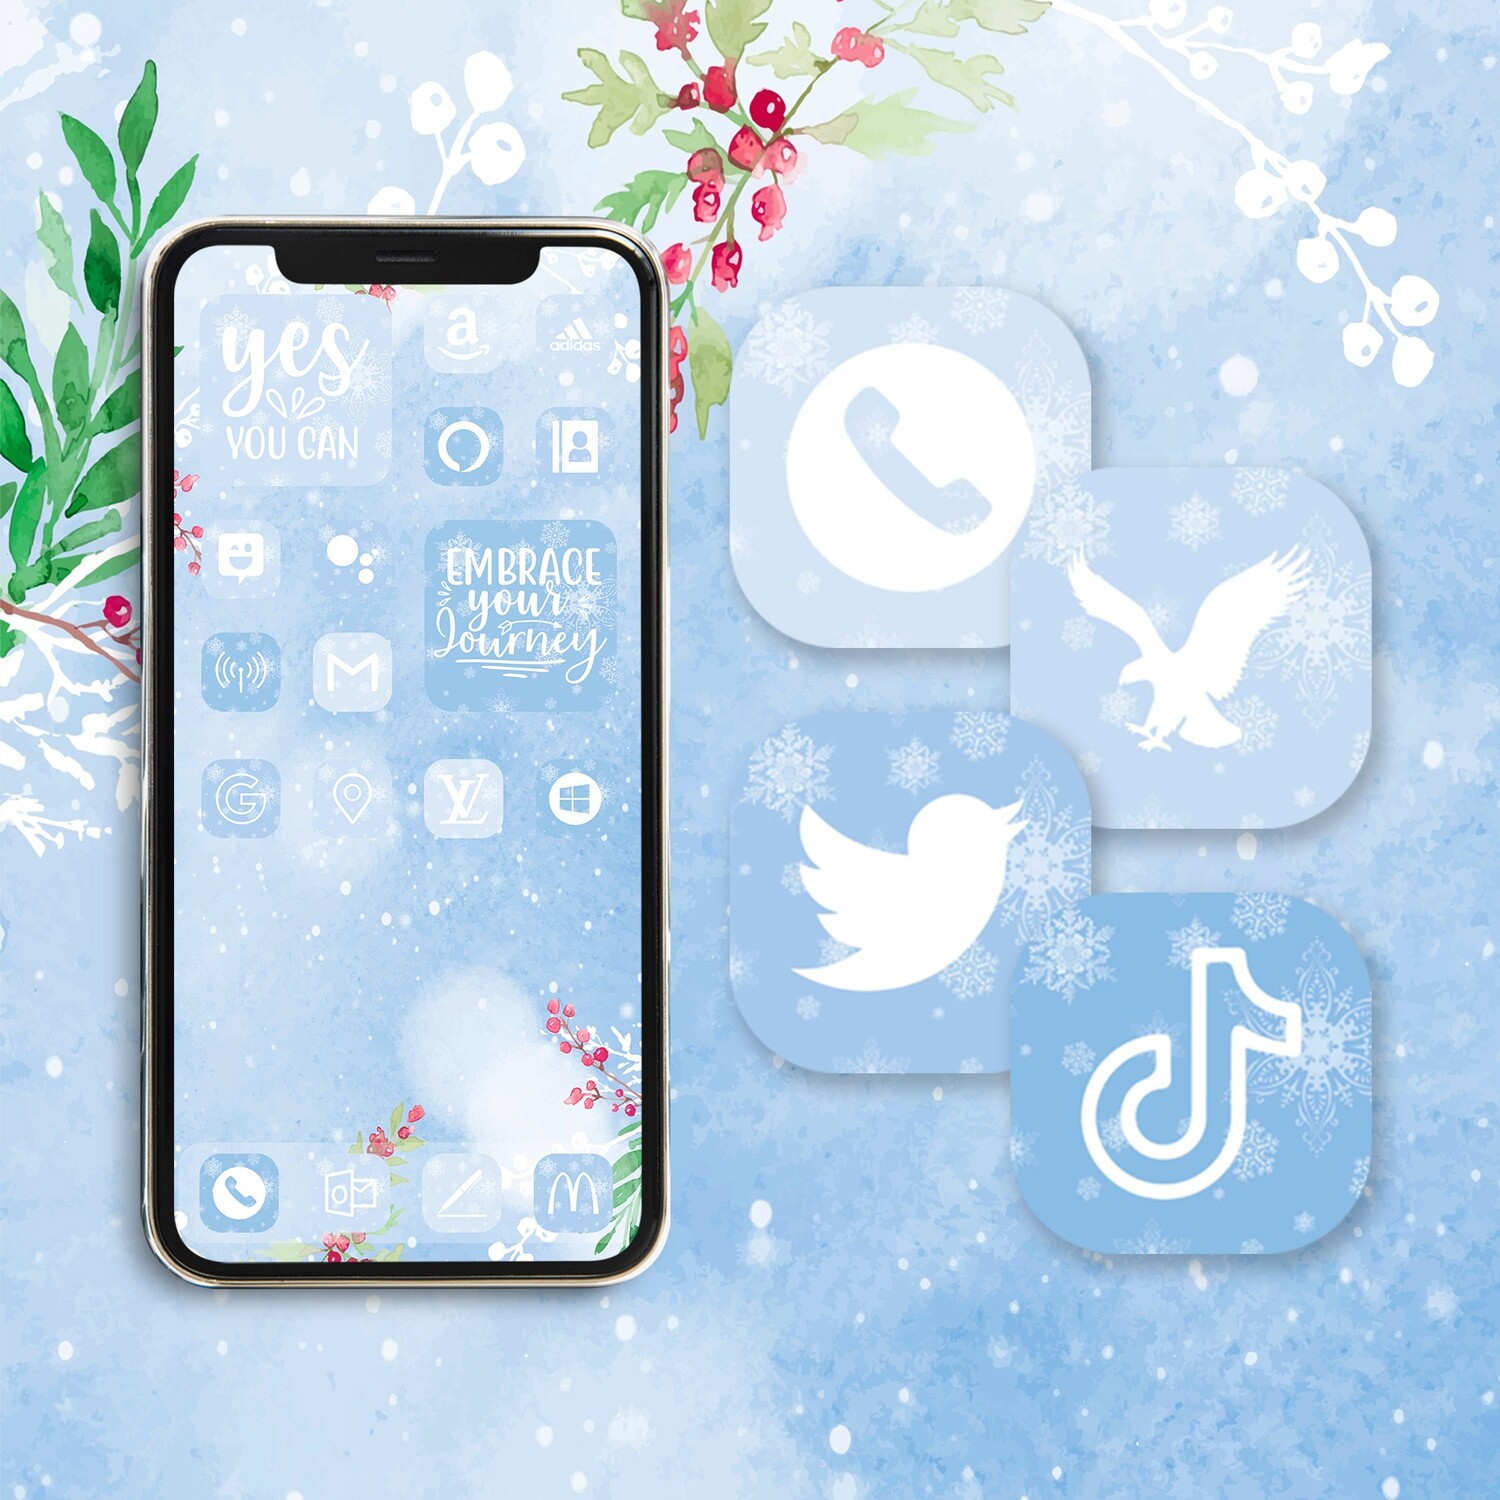 ​Floral Christmas app icons ios 15 icons aesthetic widgetsmith